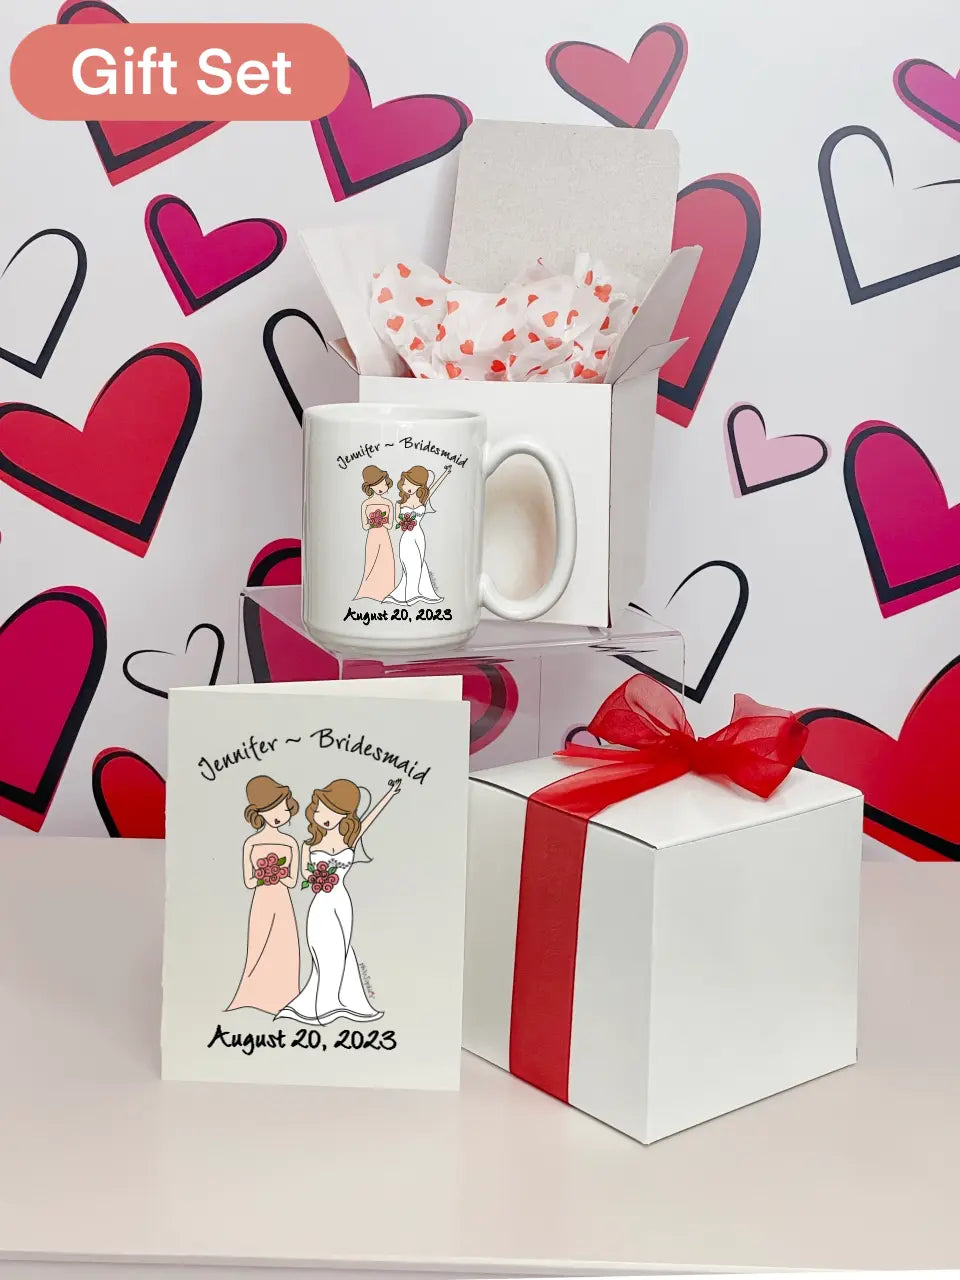 Ceramic Mug - Bridal Party